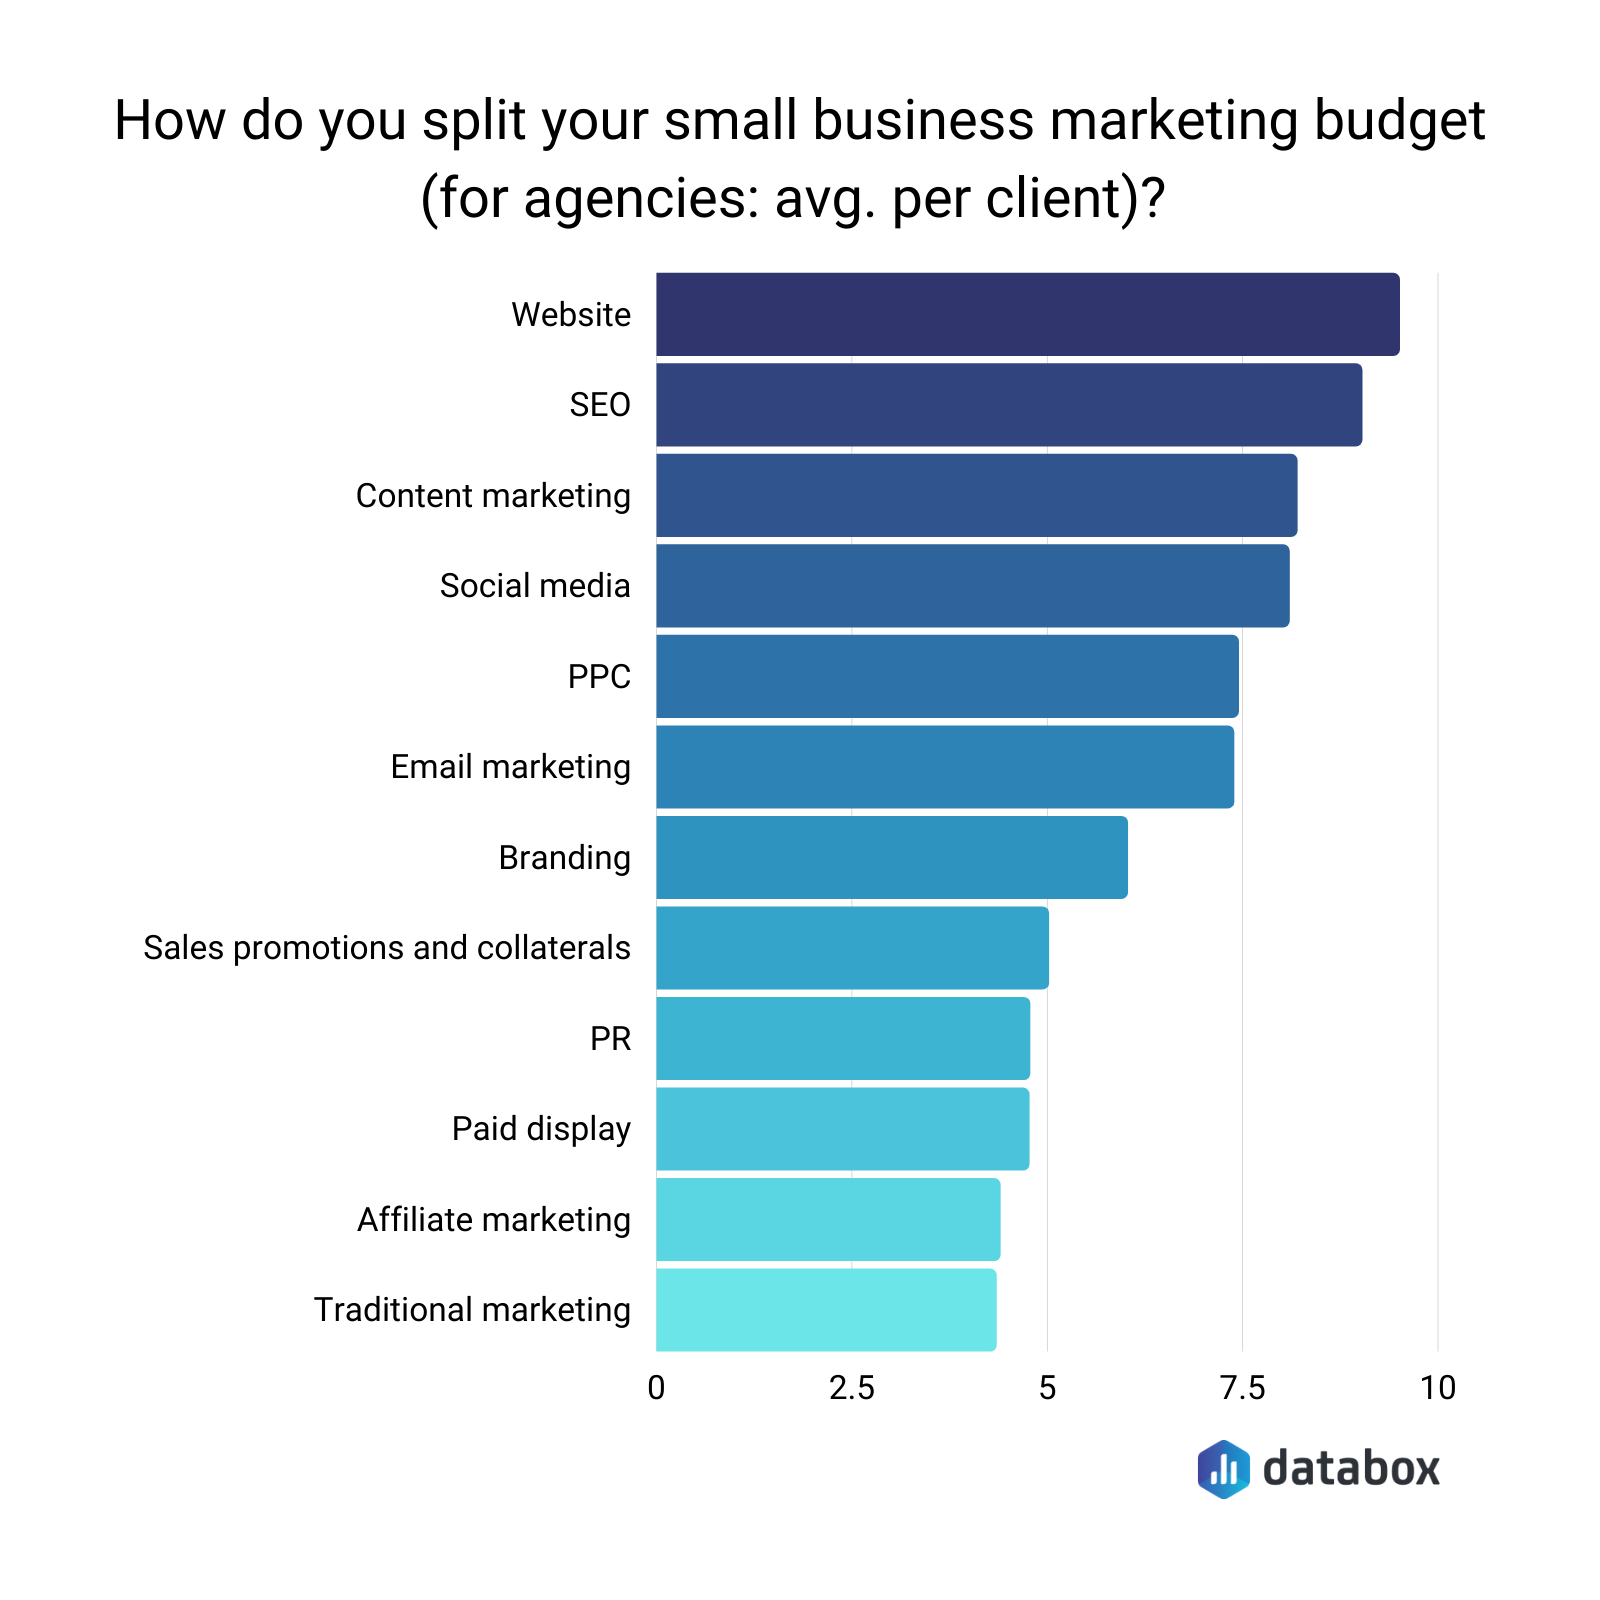 how do you split your small business marketing budget? 